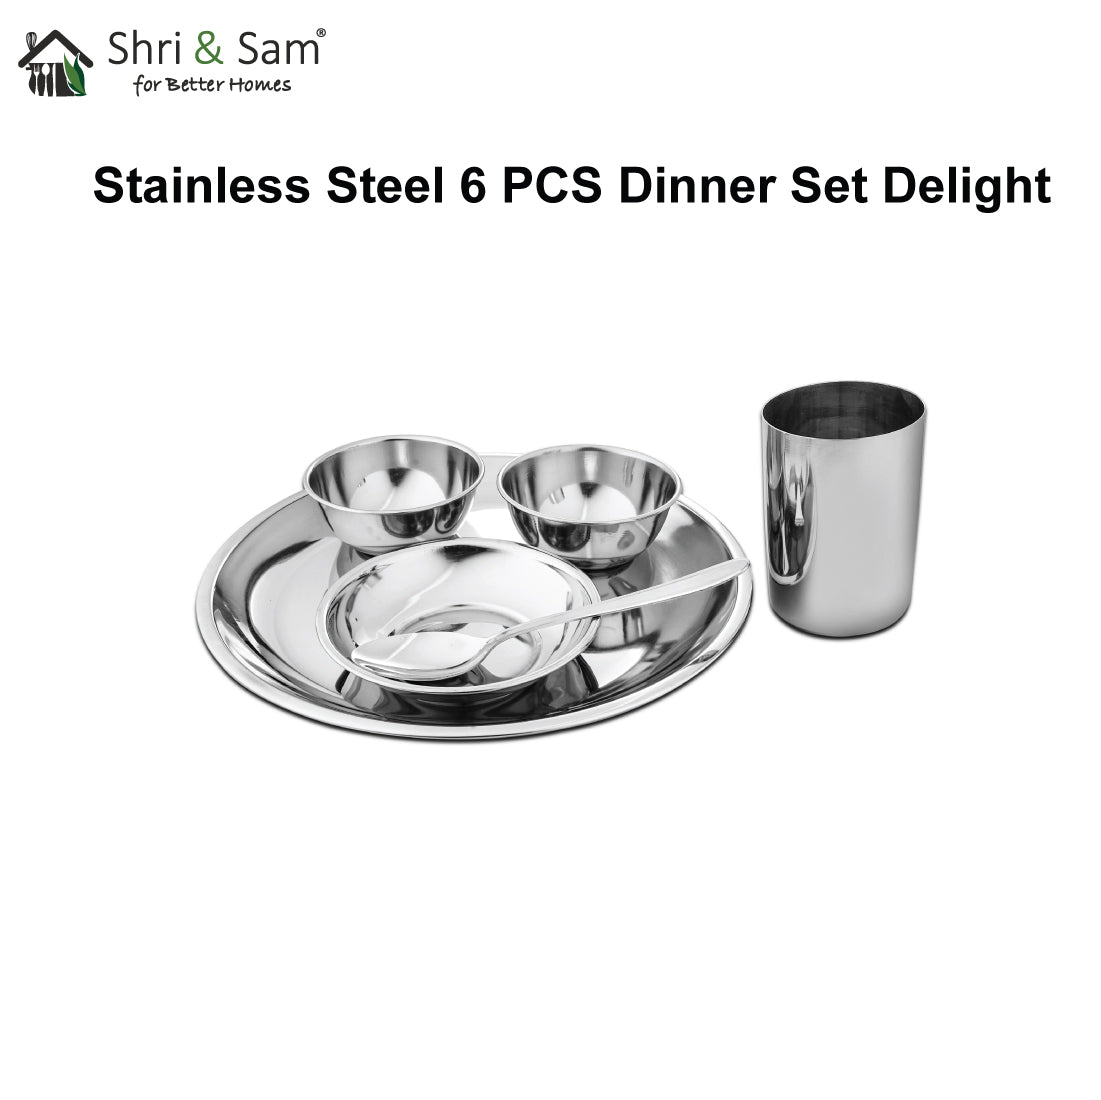 Stainless Steel 6 PCS Thali Set Delight